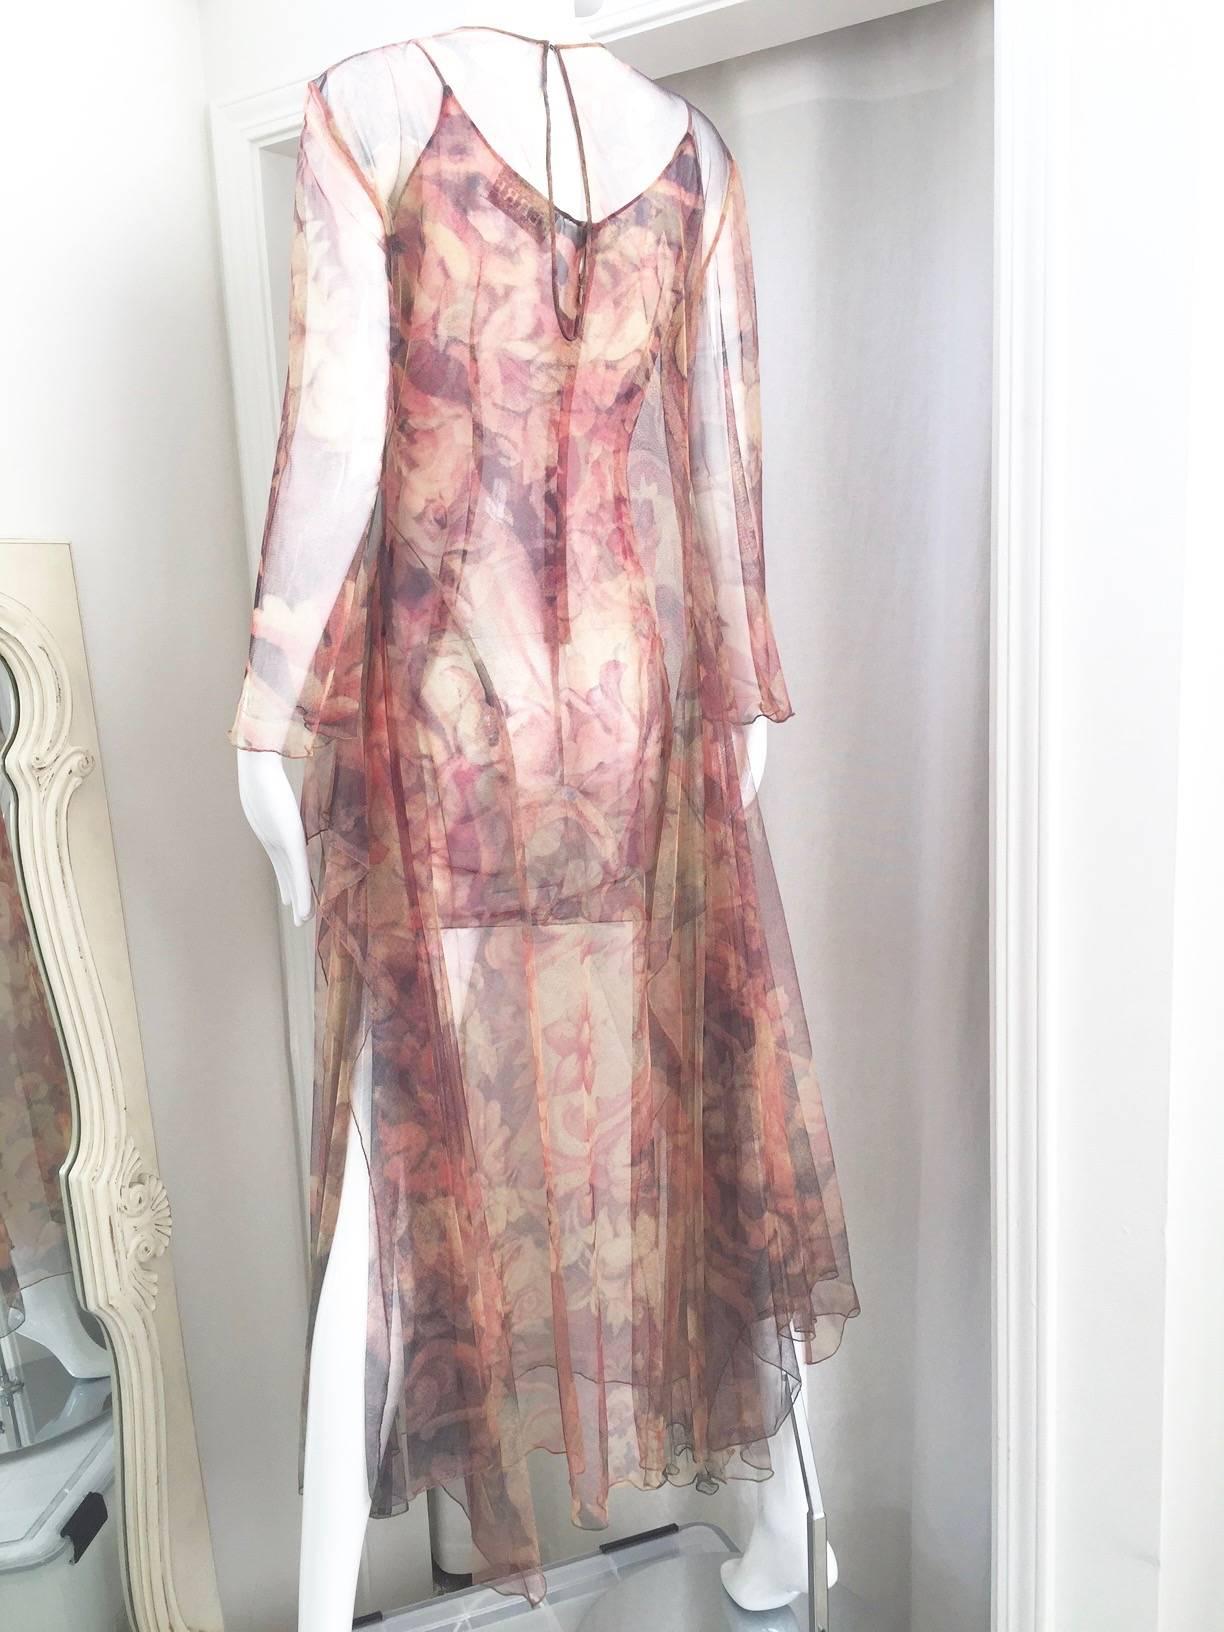 Gianfranco Ferre silk spaghetti strap silk mini dress with netting nylon sheer cover.
slip measurement;
B; 32